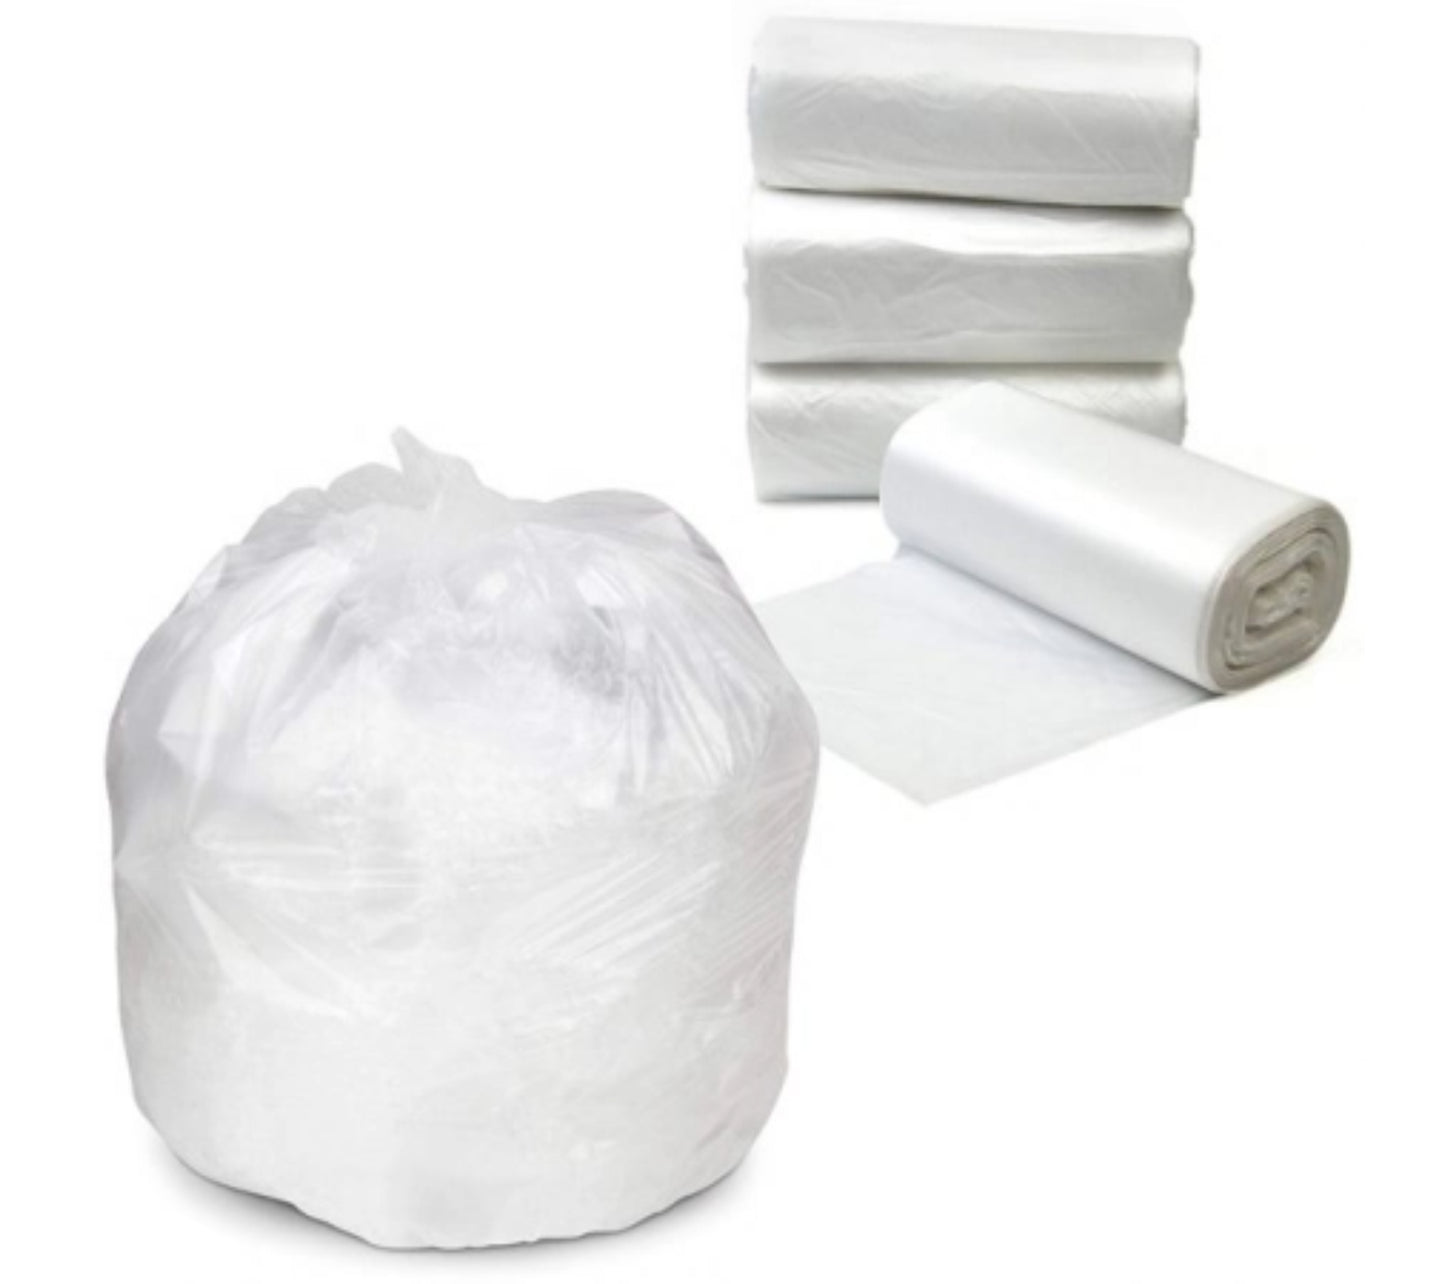 240L Clear Heavy Duty Rubbish Bags Bin Liners (100 Garbage Bags/Roll)